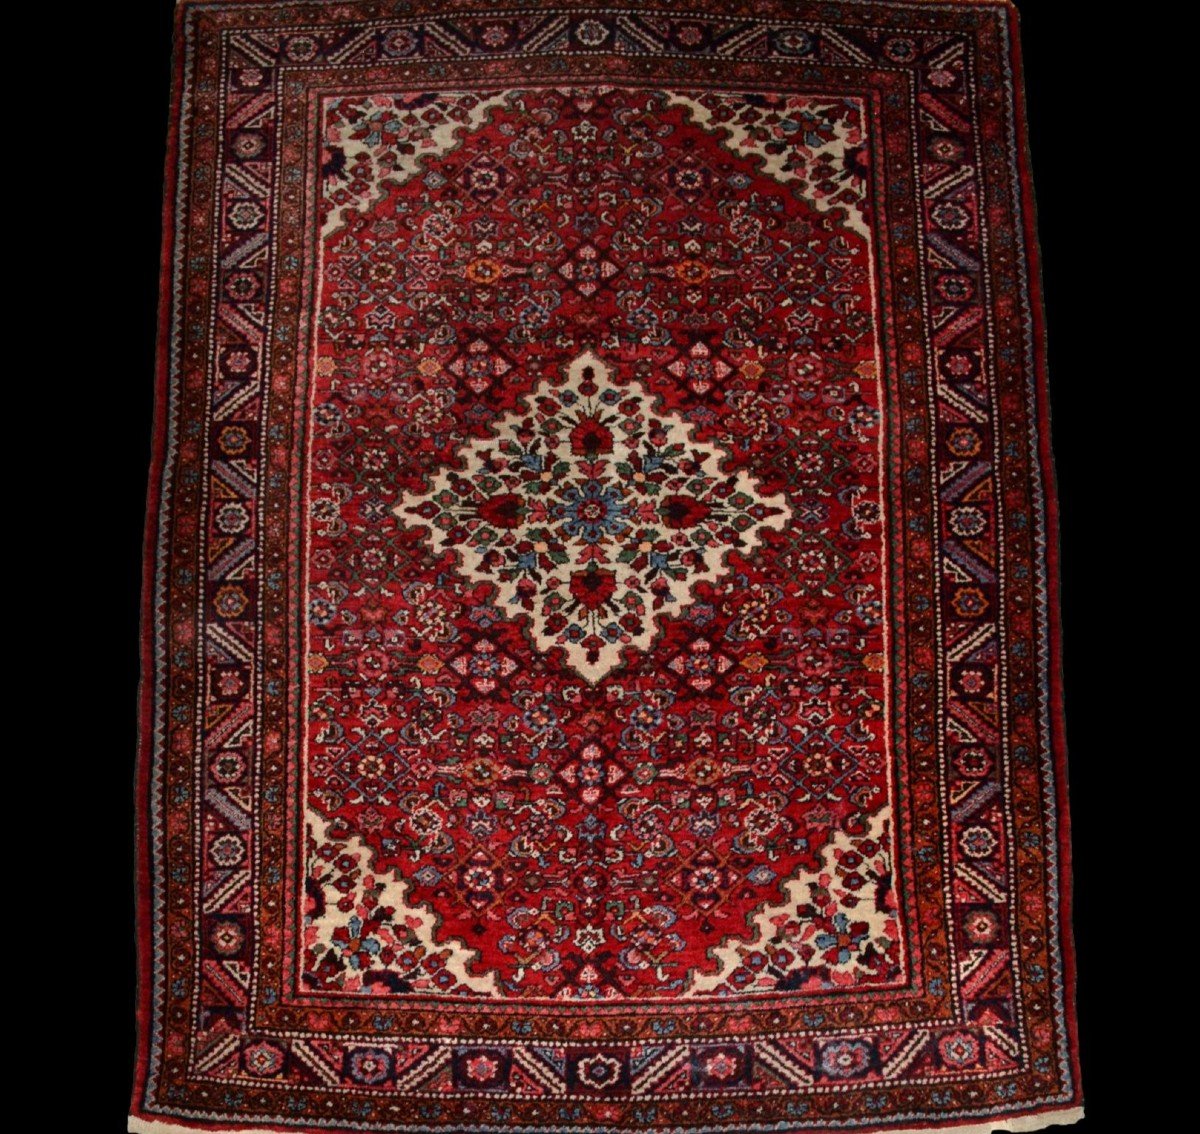 Tapis Persan Bidjar, 148 cm x 200 cm, laine nouée main en Iran vers 1950, parfait état